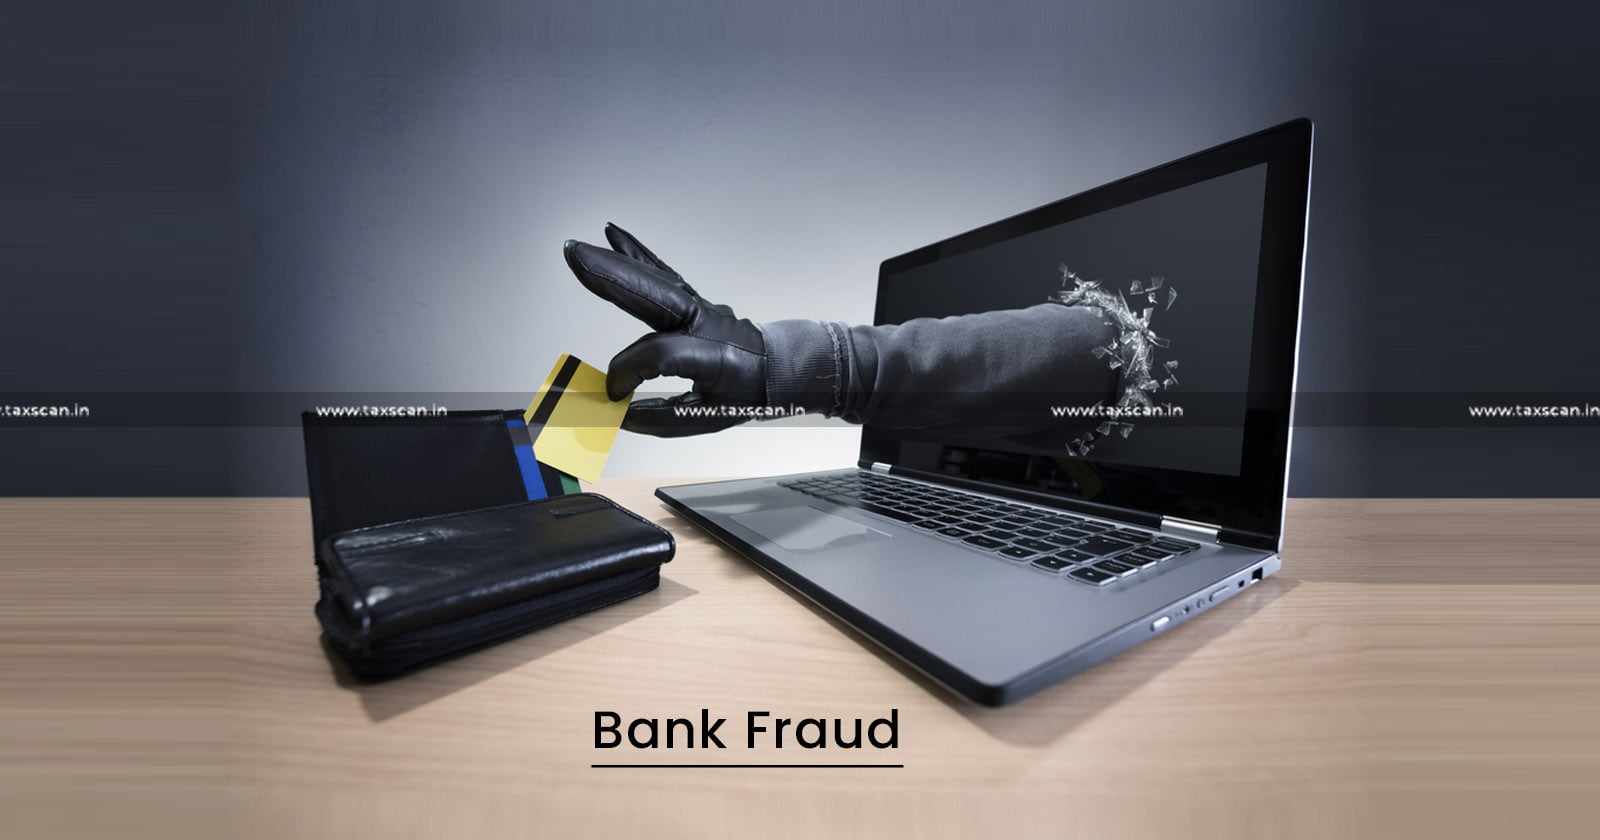 Bank Fraud - CBI - Case - PNB Manager - Companies -CBI Registers Case - taxscasn